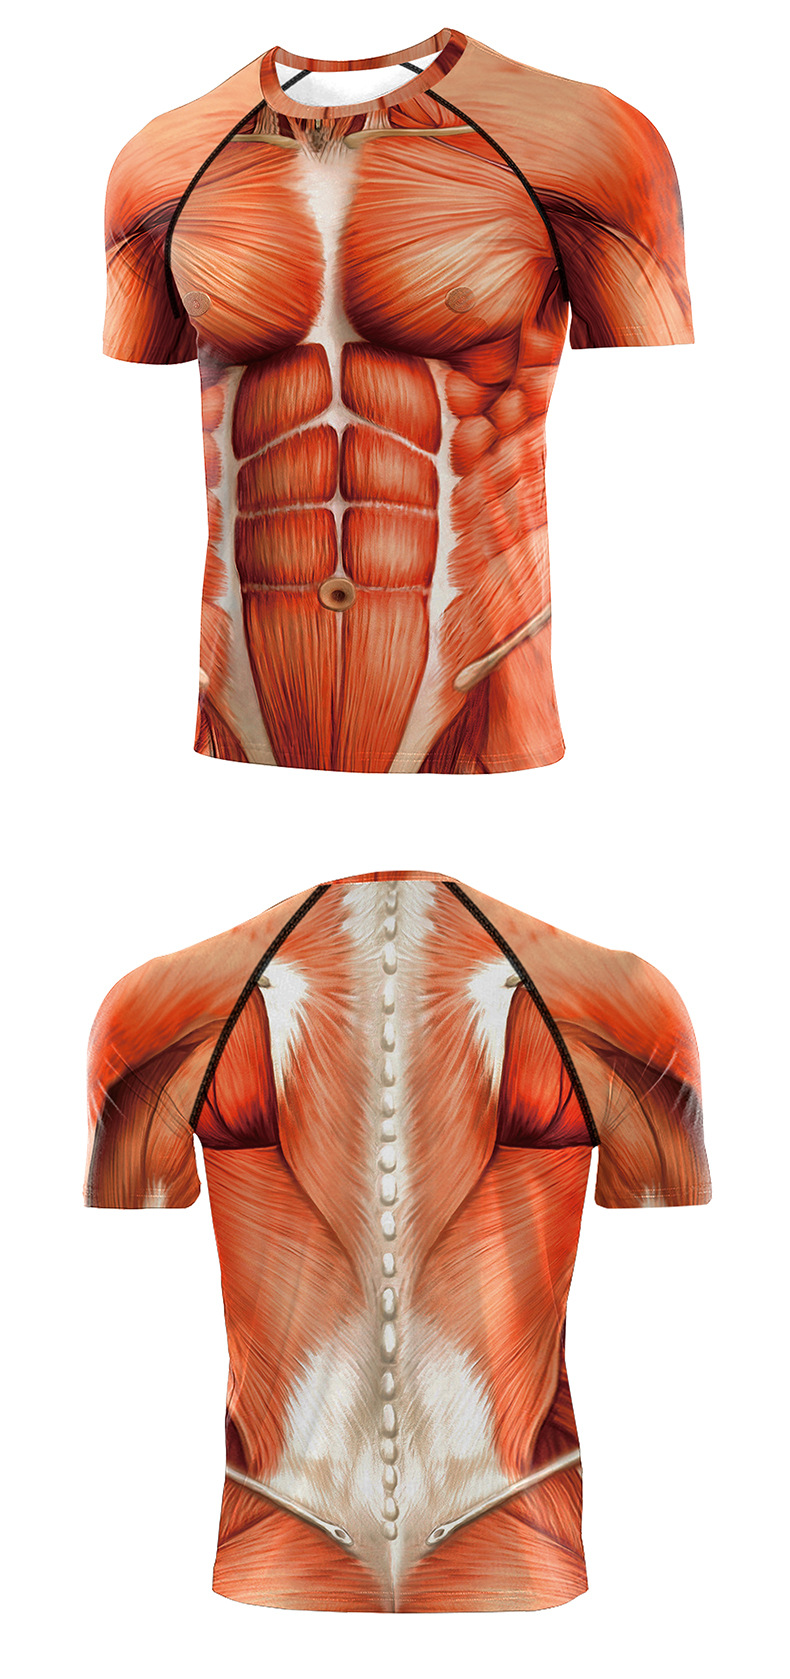 Short Sleeve Muscle Anatomy Costume Cosplay Shirt